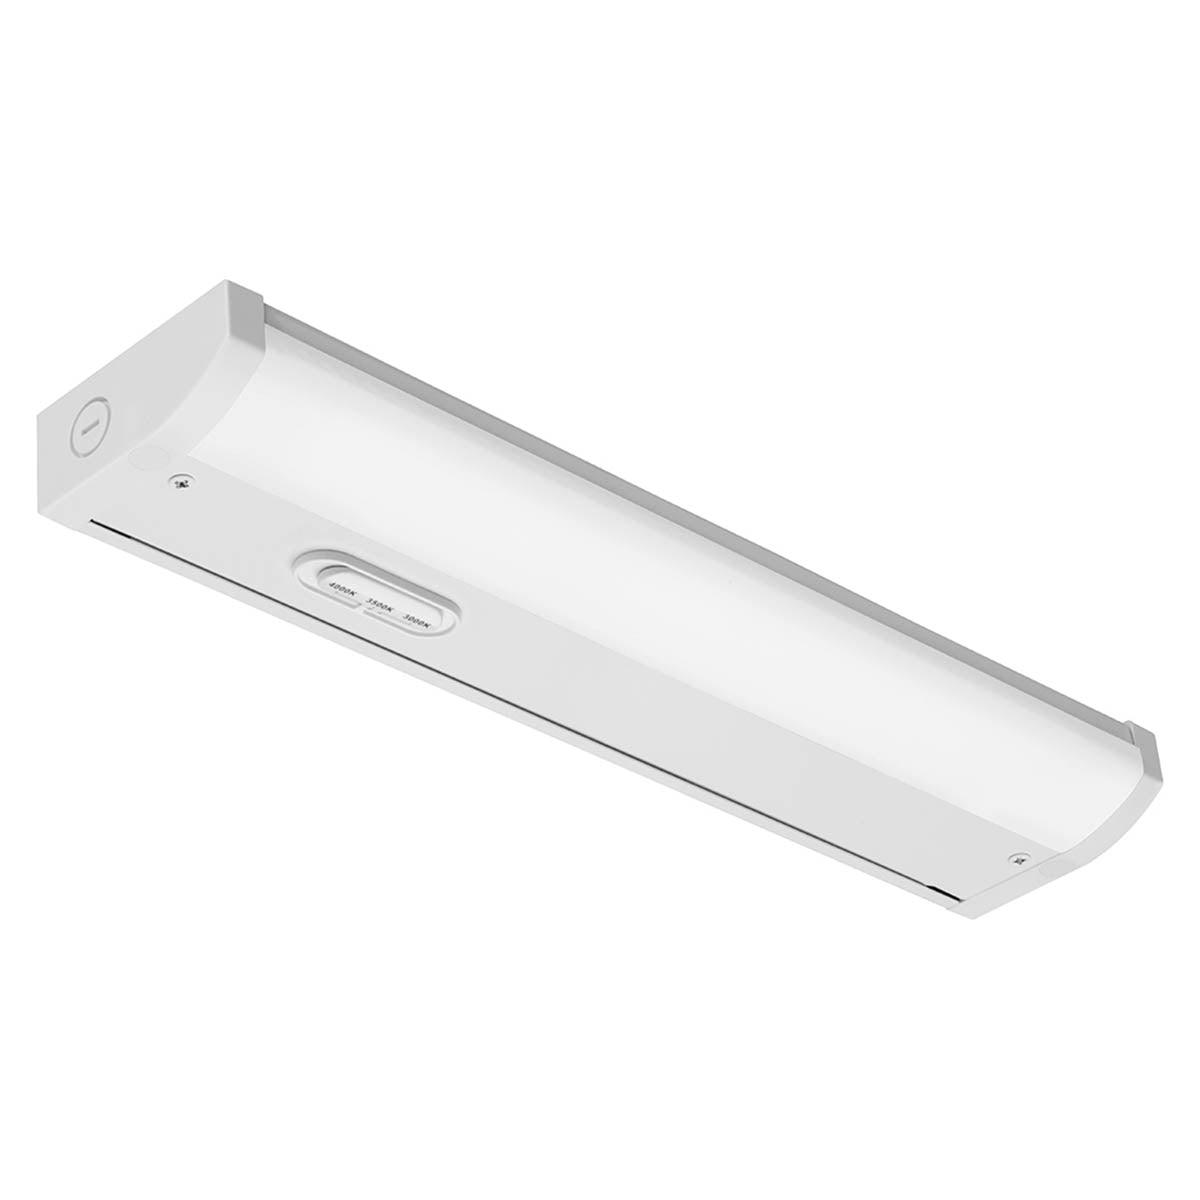 UCES 18 Inch Switchable White Under Cabinet LED Light, 646 Lumens, 27K/30K/35K, 120V